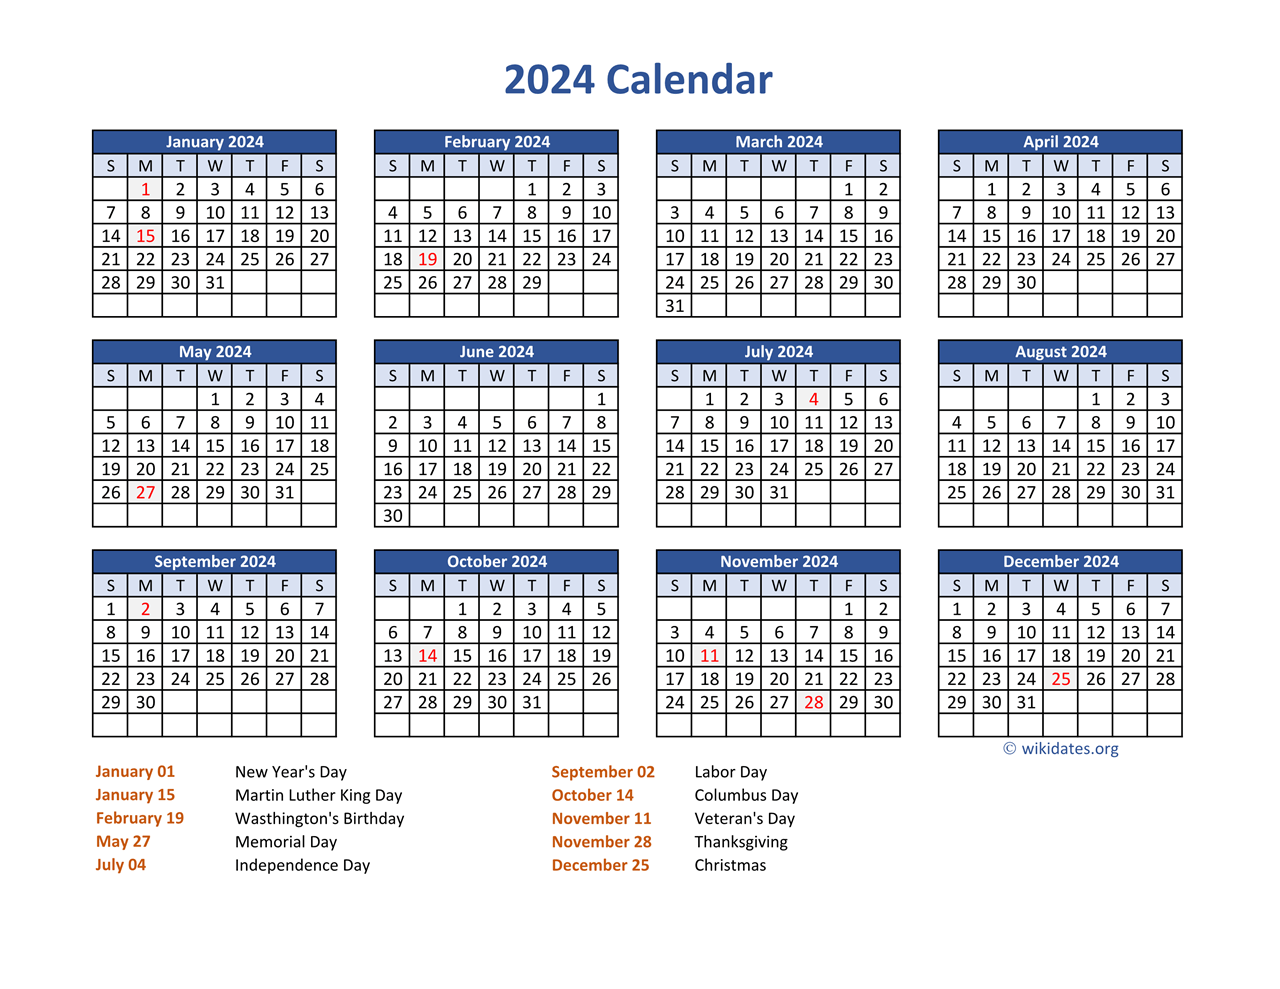 Pdf Calendar 2024 With Federal Holidays | Wikidates for Printable 2024 Holiday Calendar